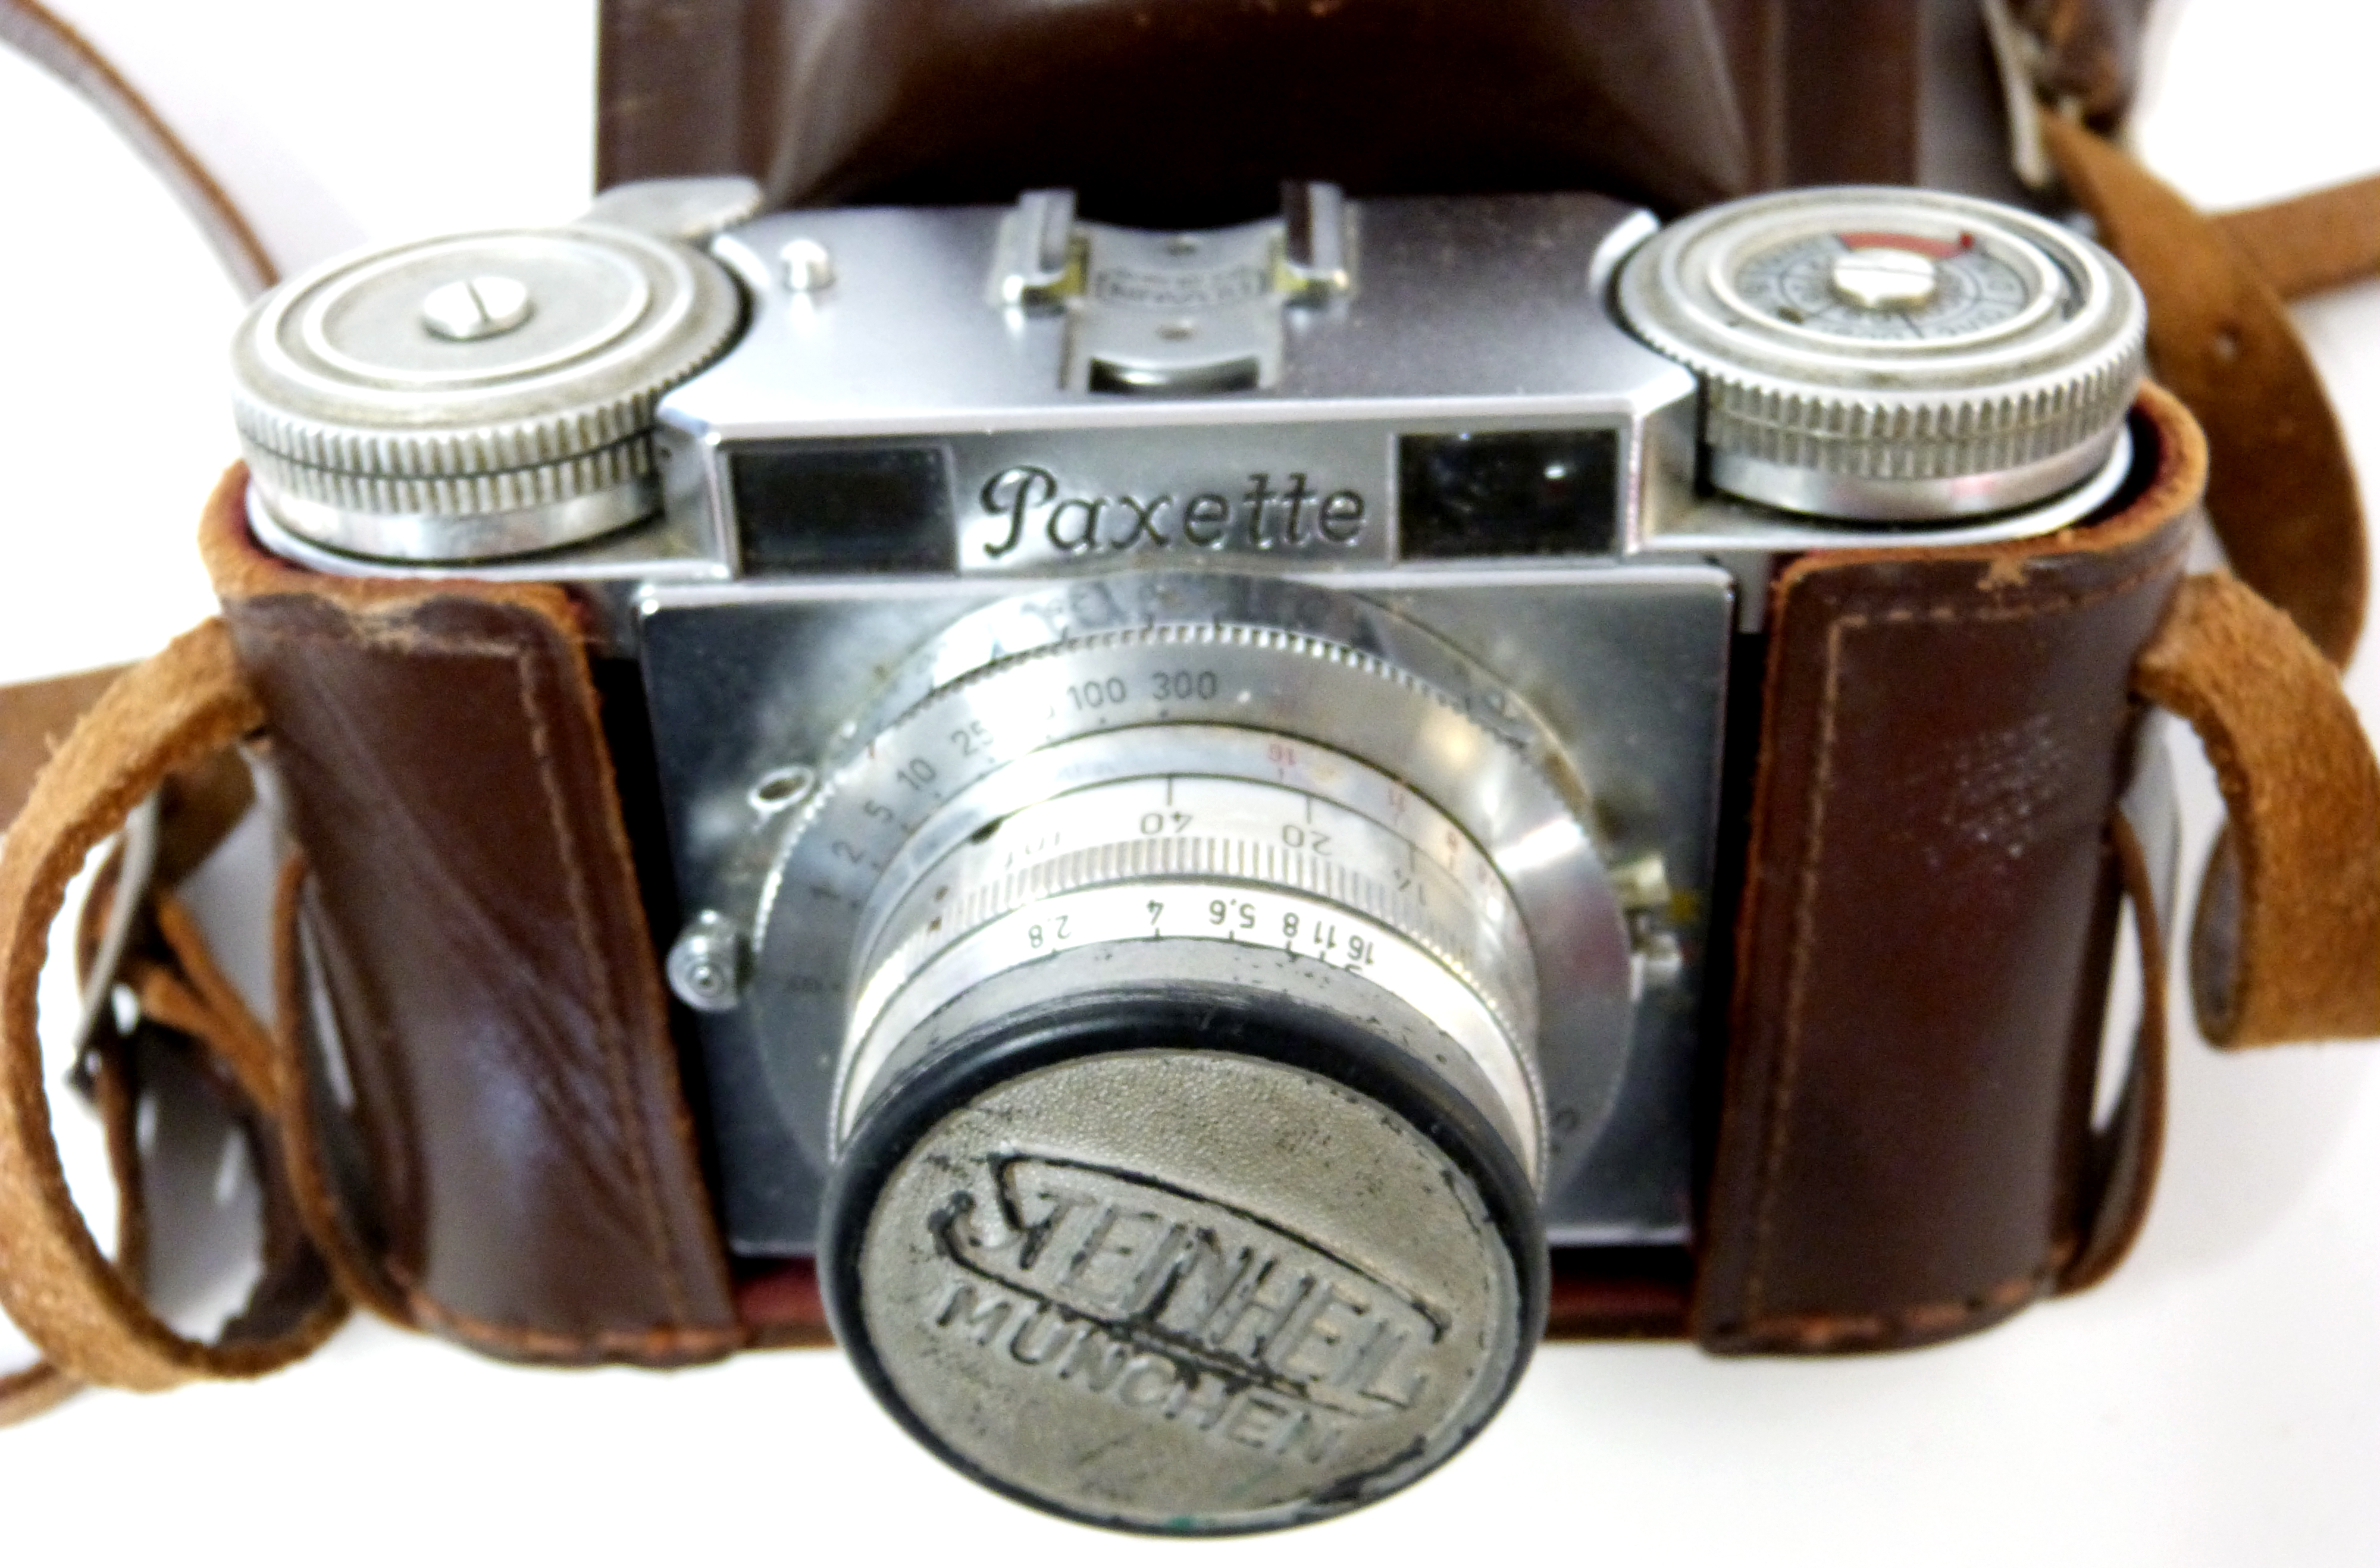 Braun Paxette camera - Image 4 of 5